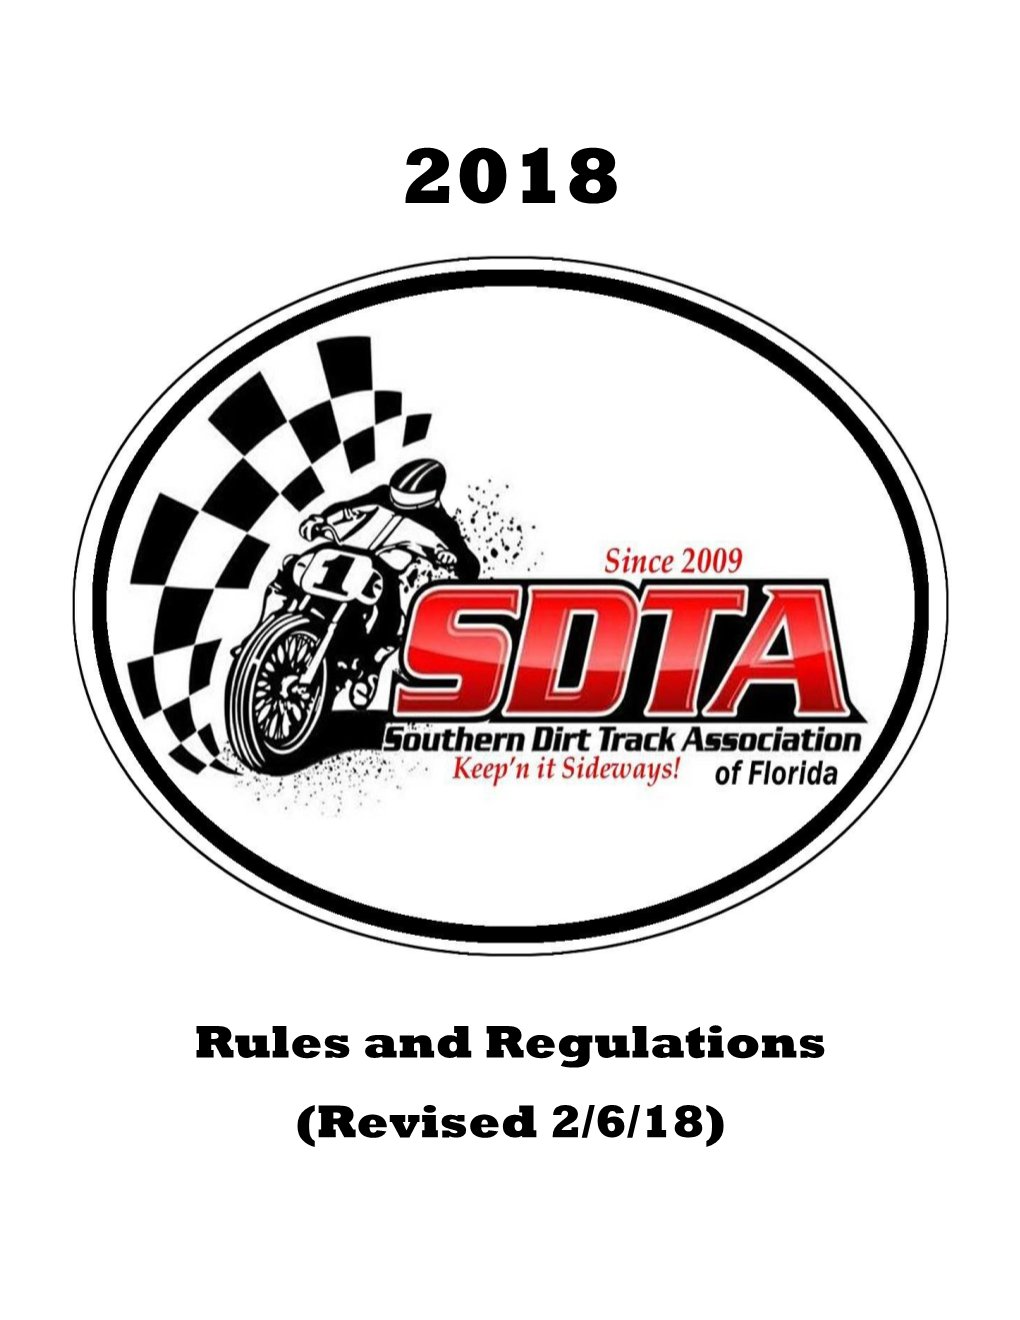 SDTA Flat Track Racing Rules and Regulations 2013